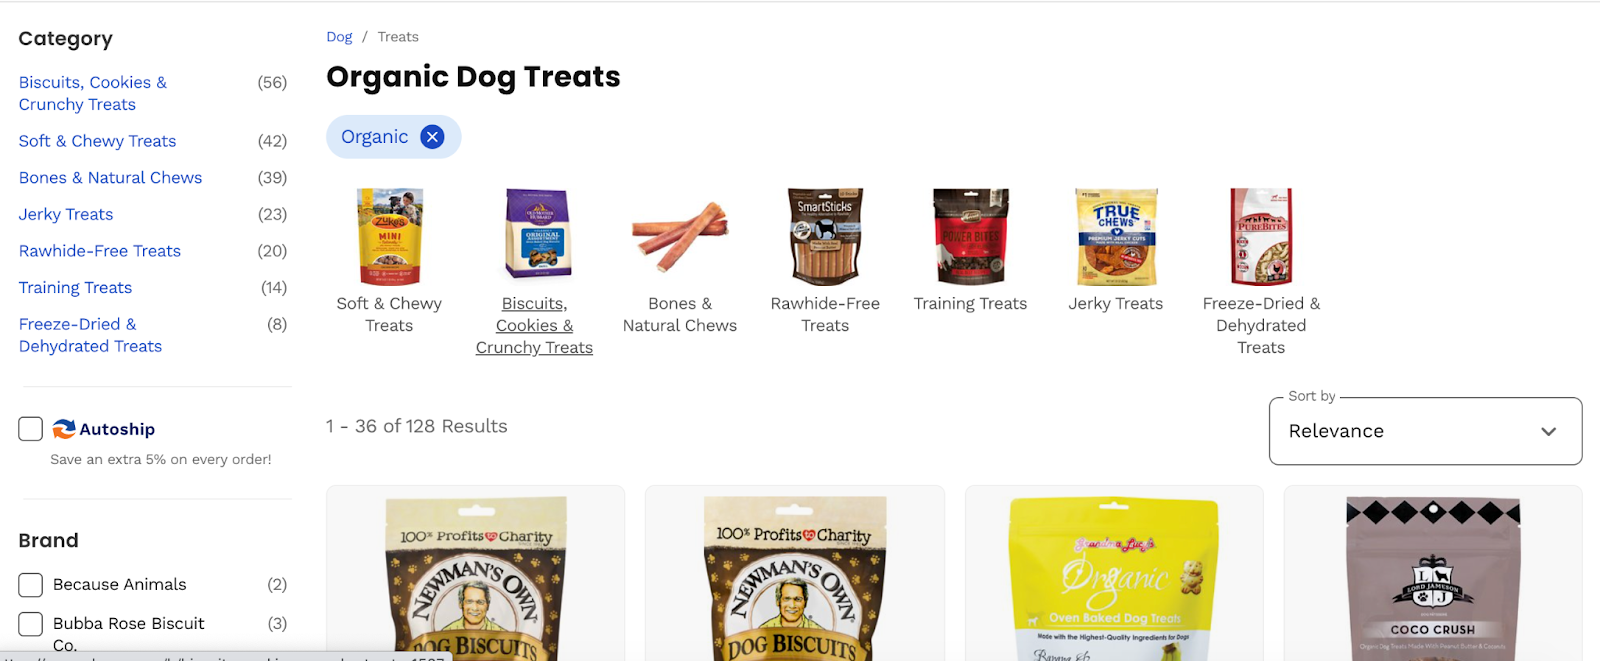 "Organic Dog Treats" category on ecommerce site